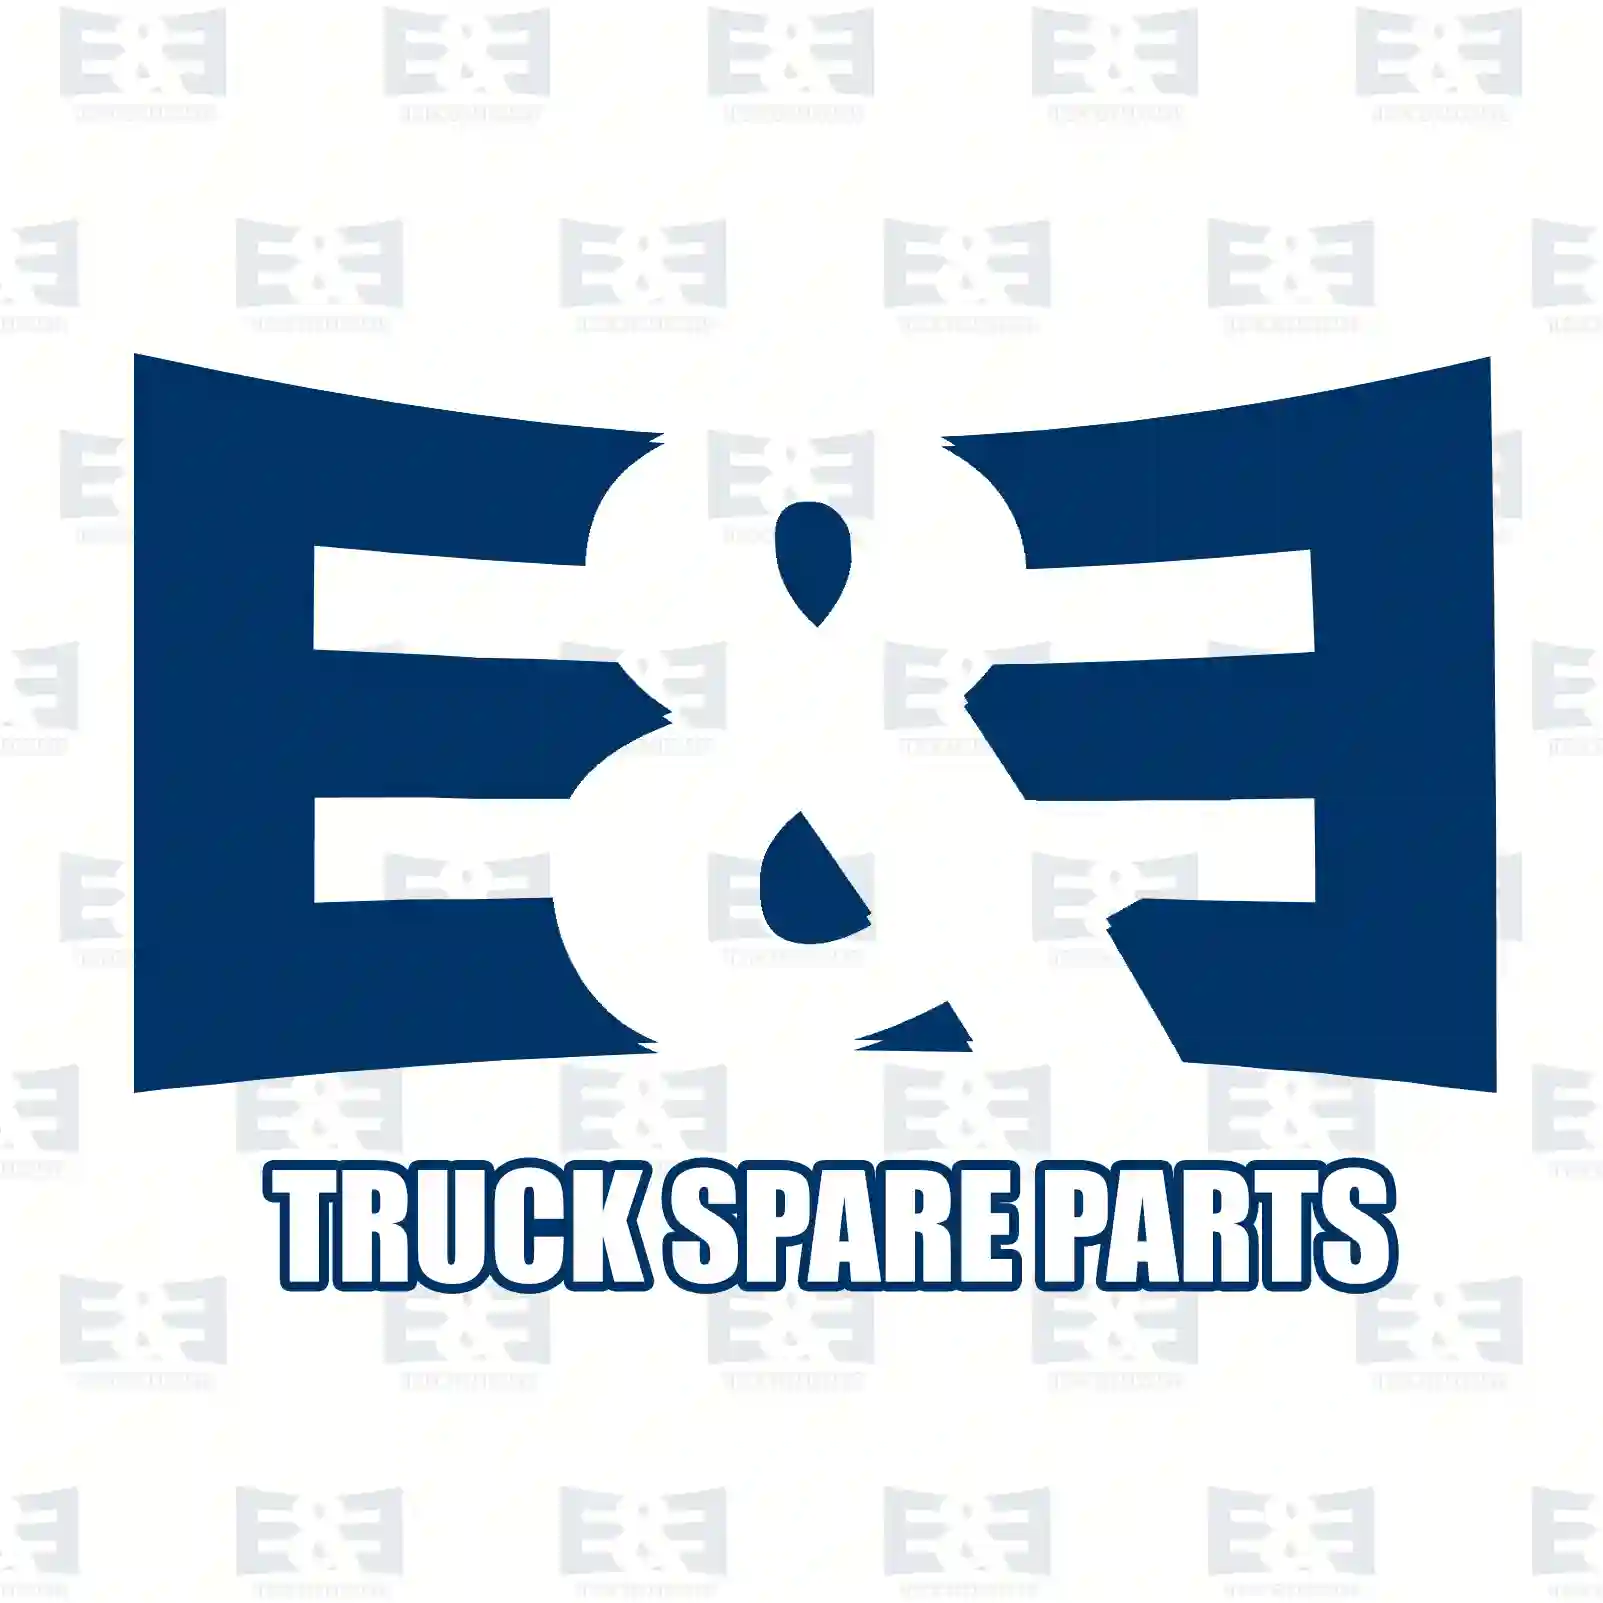 Parts kit, jack connector, 2E2298827, 0025402381, 3565400281, ZG20664-0008 ||  2E2298827 E&E Truck Spare Parts | Truck Spare Parts, Auotomotive Spare Parts Parts kit, jack connector, 2E2298827, 0025402381, 3565400281, ZG20664-0008 ||  2E2298827 E&E Truck Spare Parts | Truck Spare Parts, Auotomotive Spare Parts